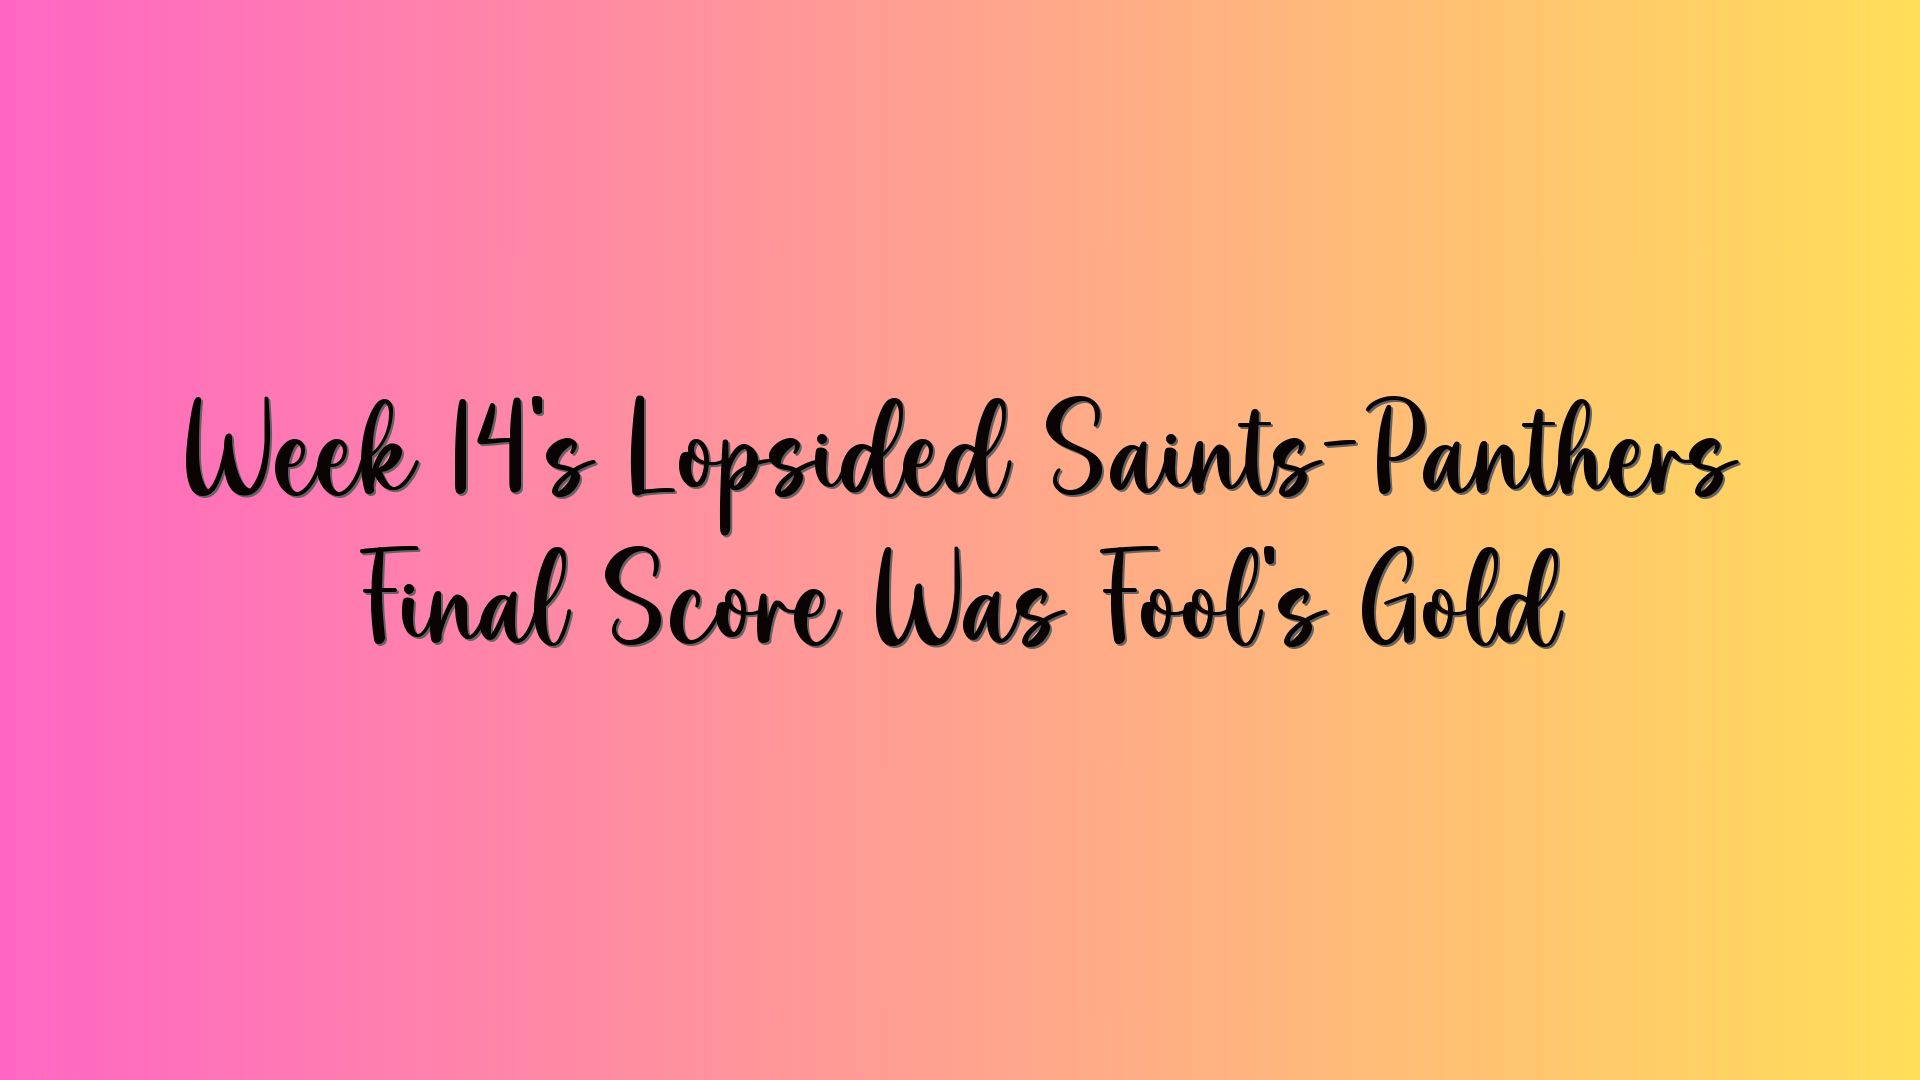 Week 14’s Lopsided Saints-Panthers Final Score Was Fool’s Gold